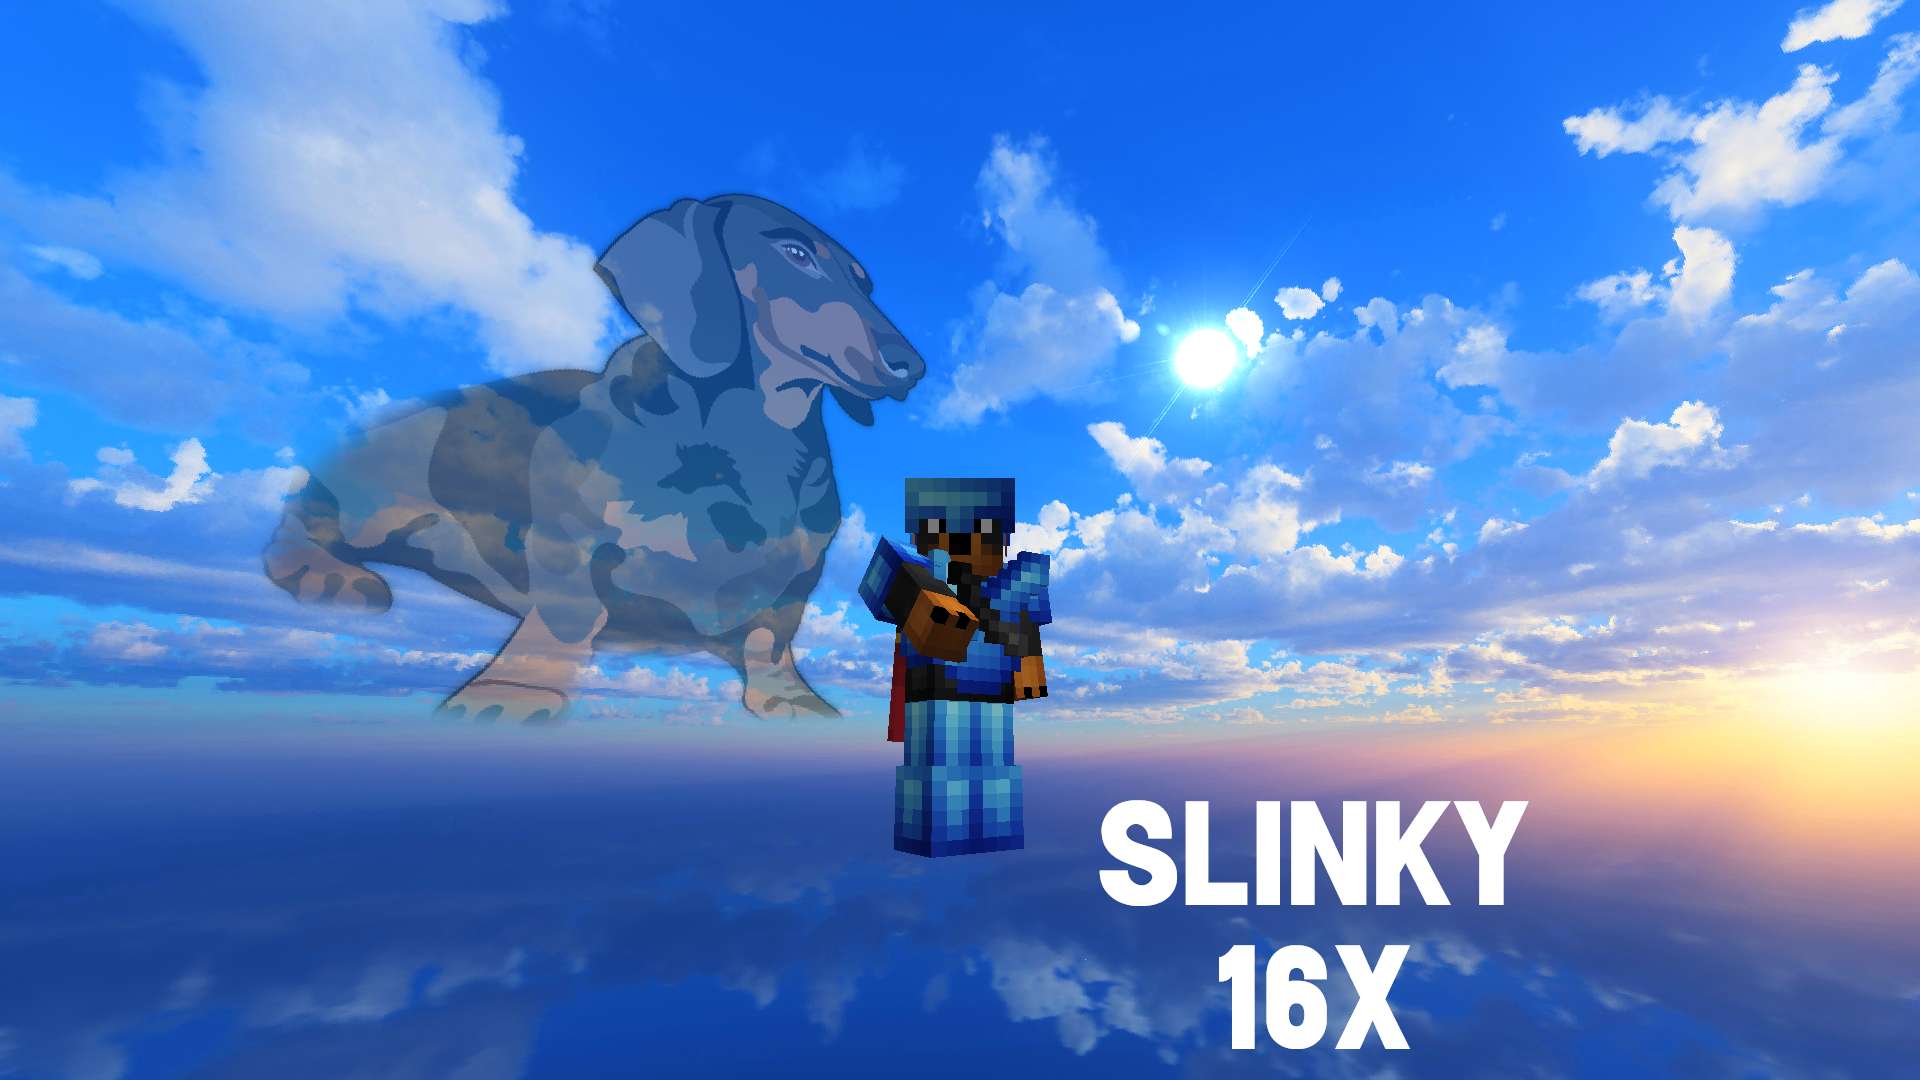 Slinky 16x by isla & tropq_ on PvPRP